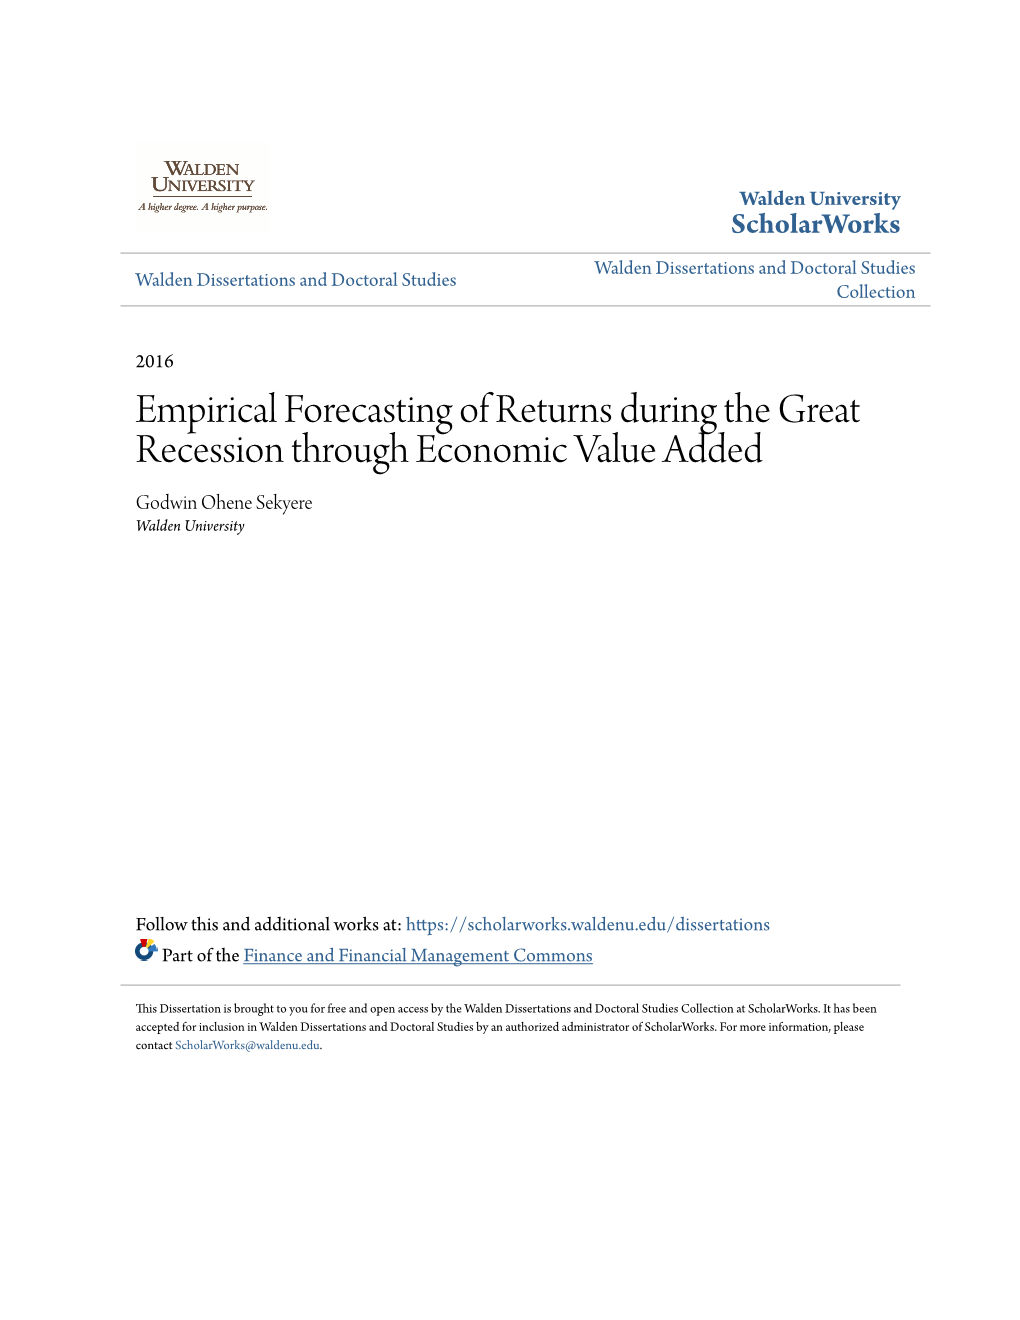 Empirical Forecasting of Returns During the Great Recession Through Economic Value Added Godwin Ohene Sekyere Walden University